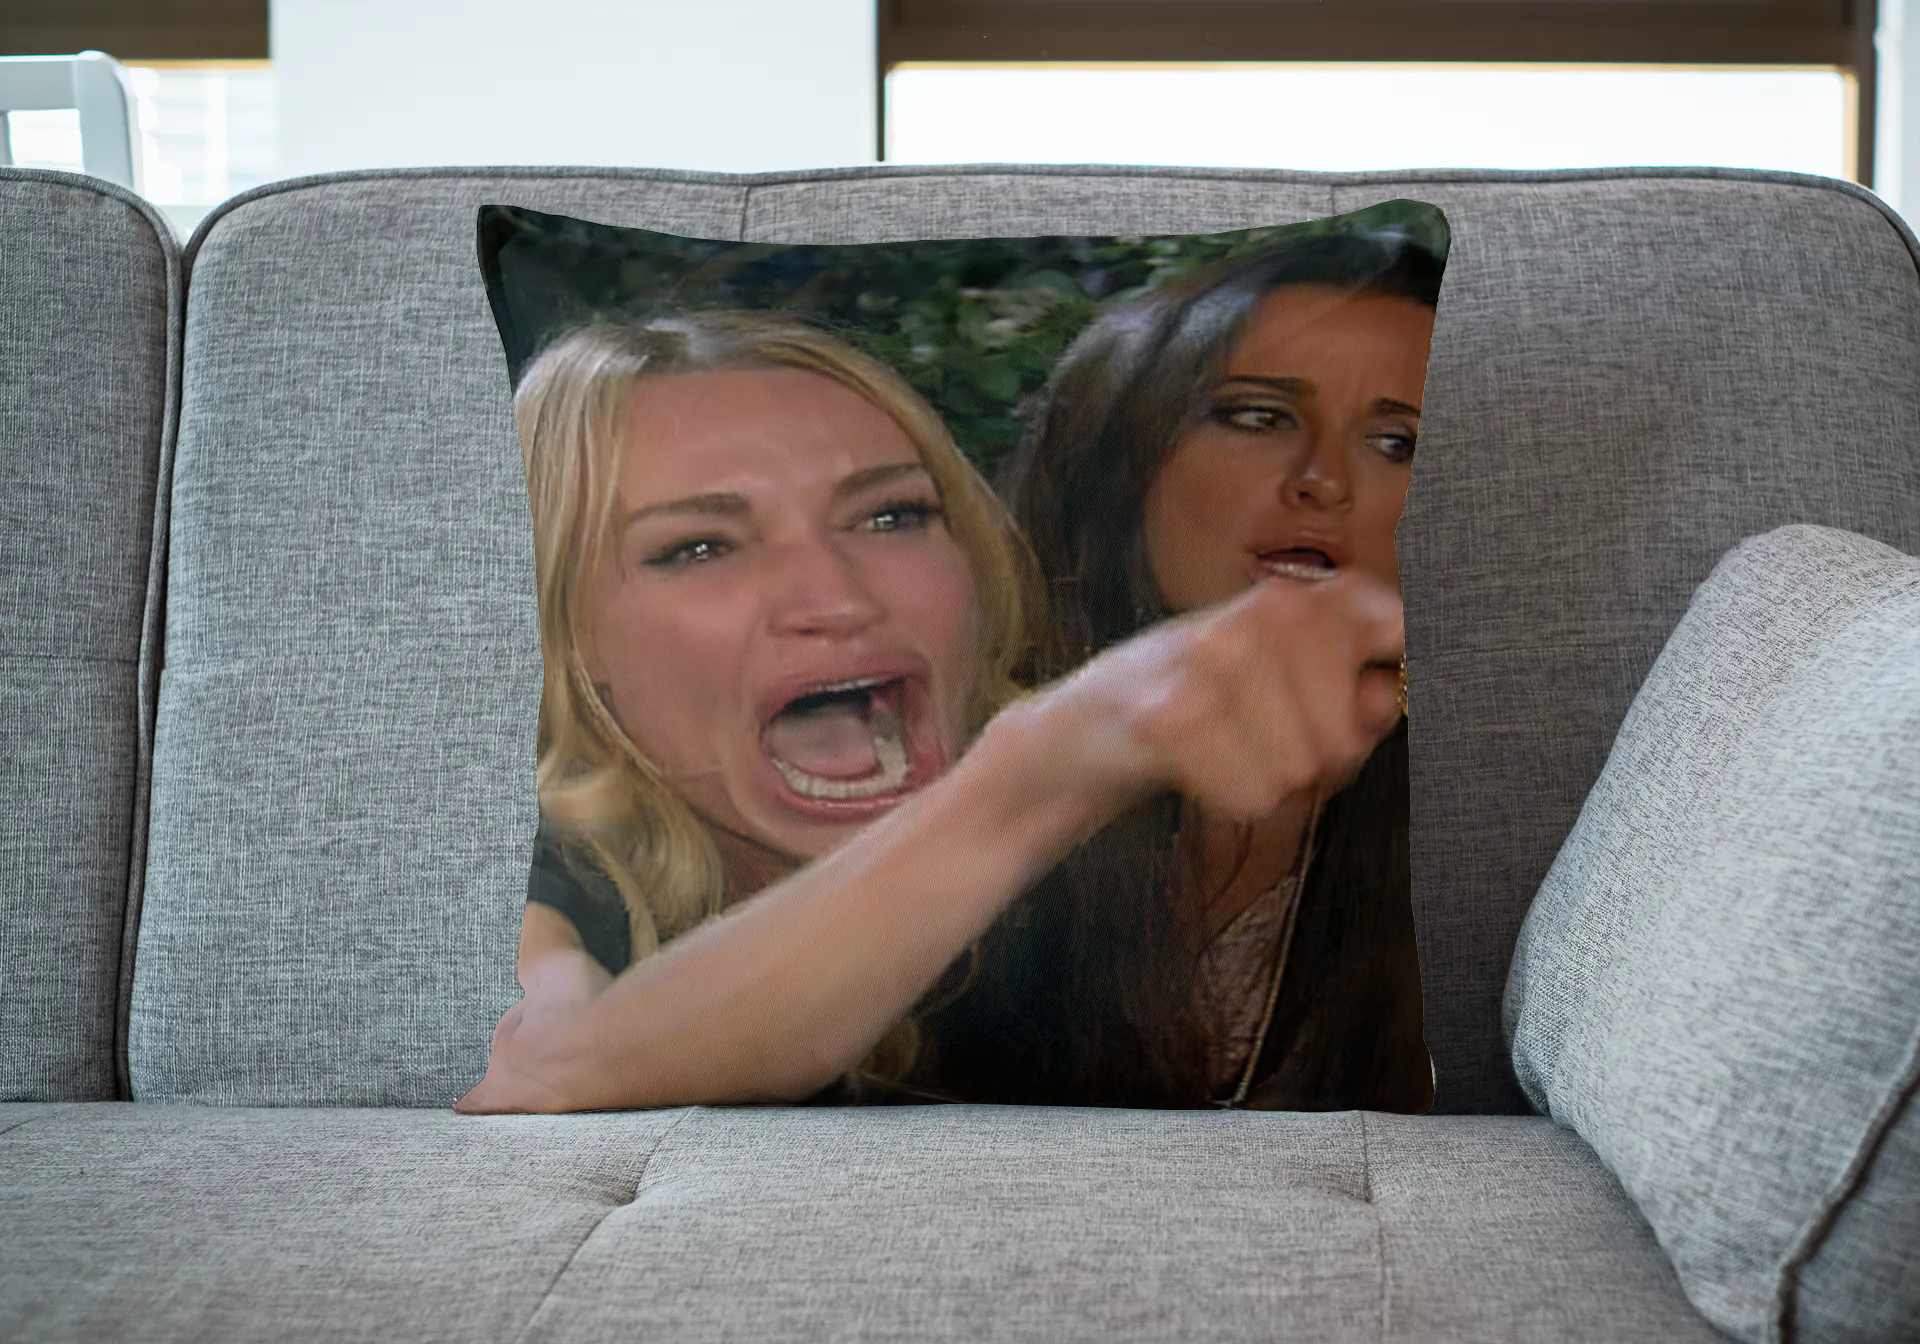 Woman Yelling at Cat Pillow (Woman)